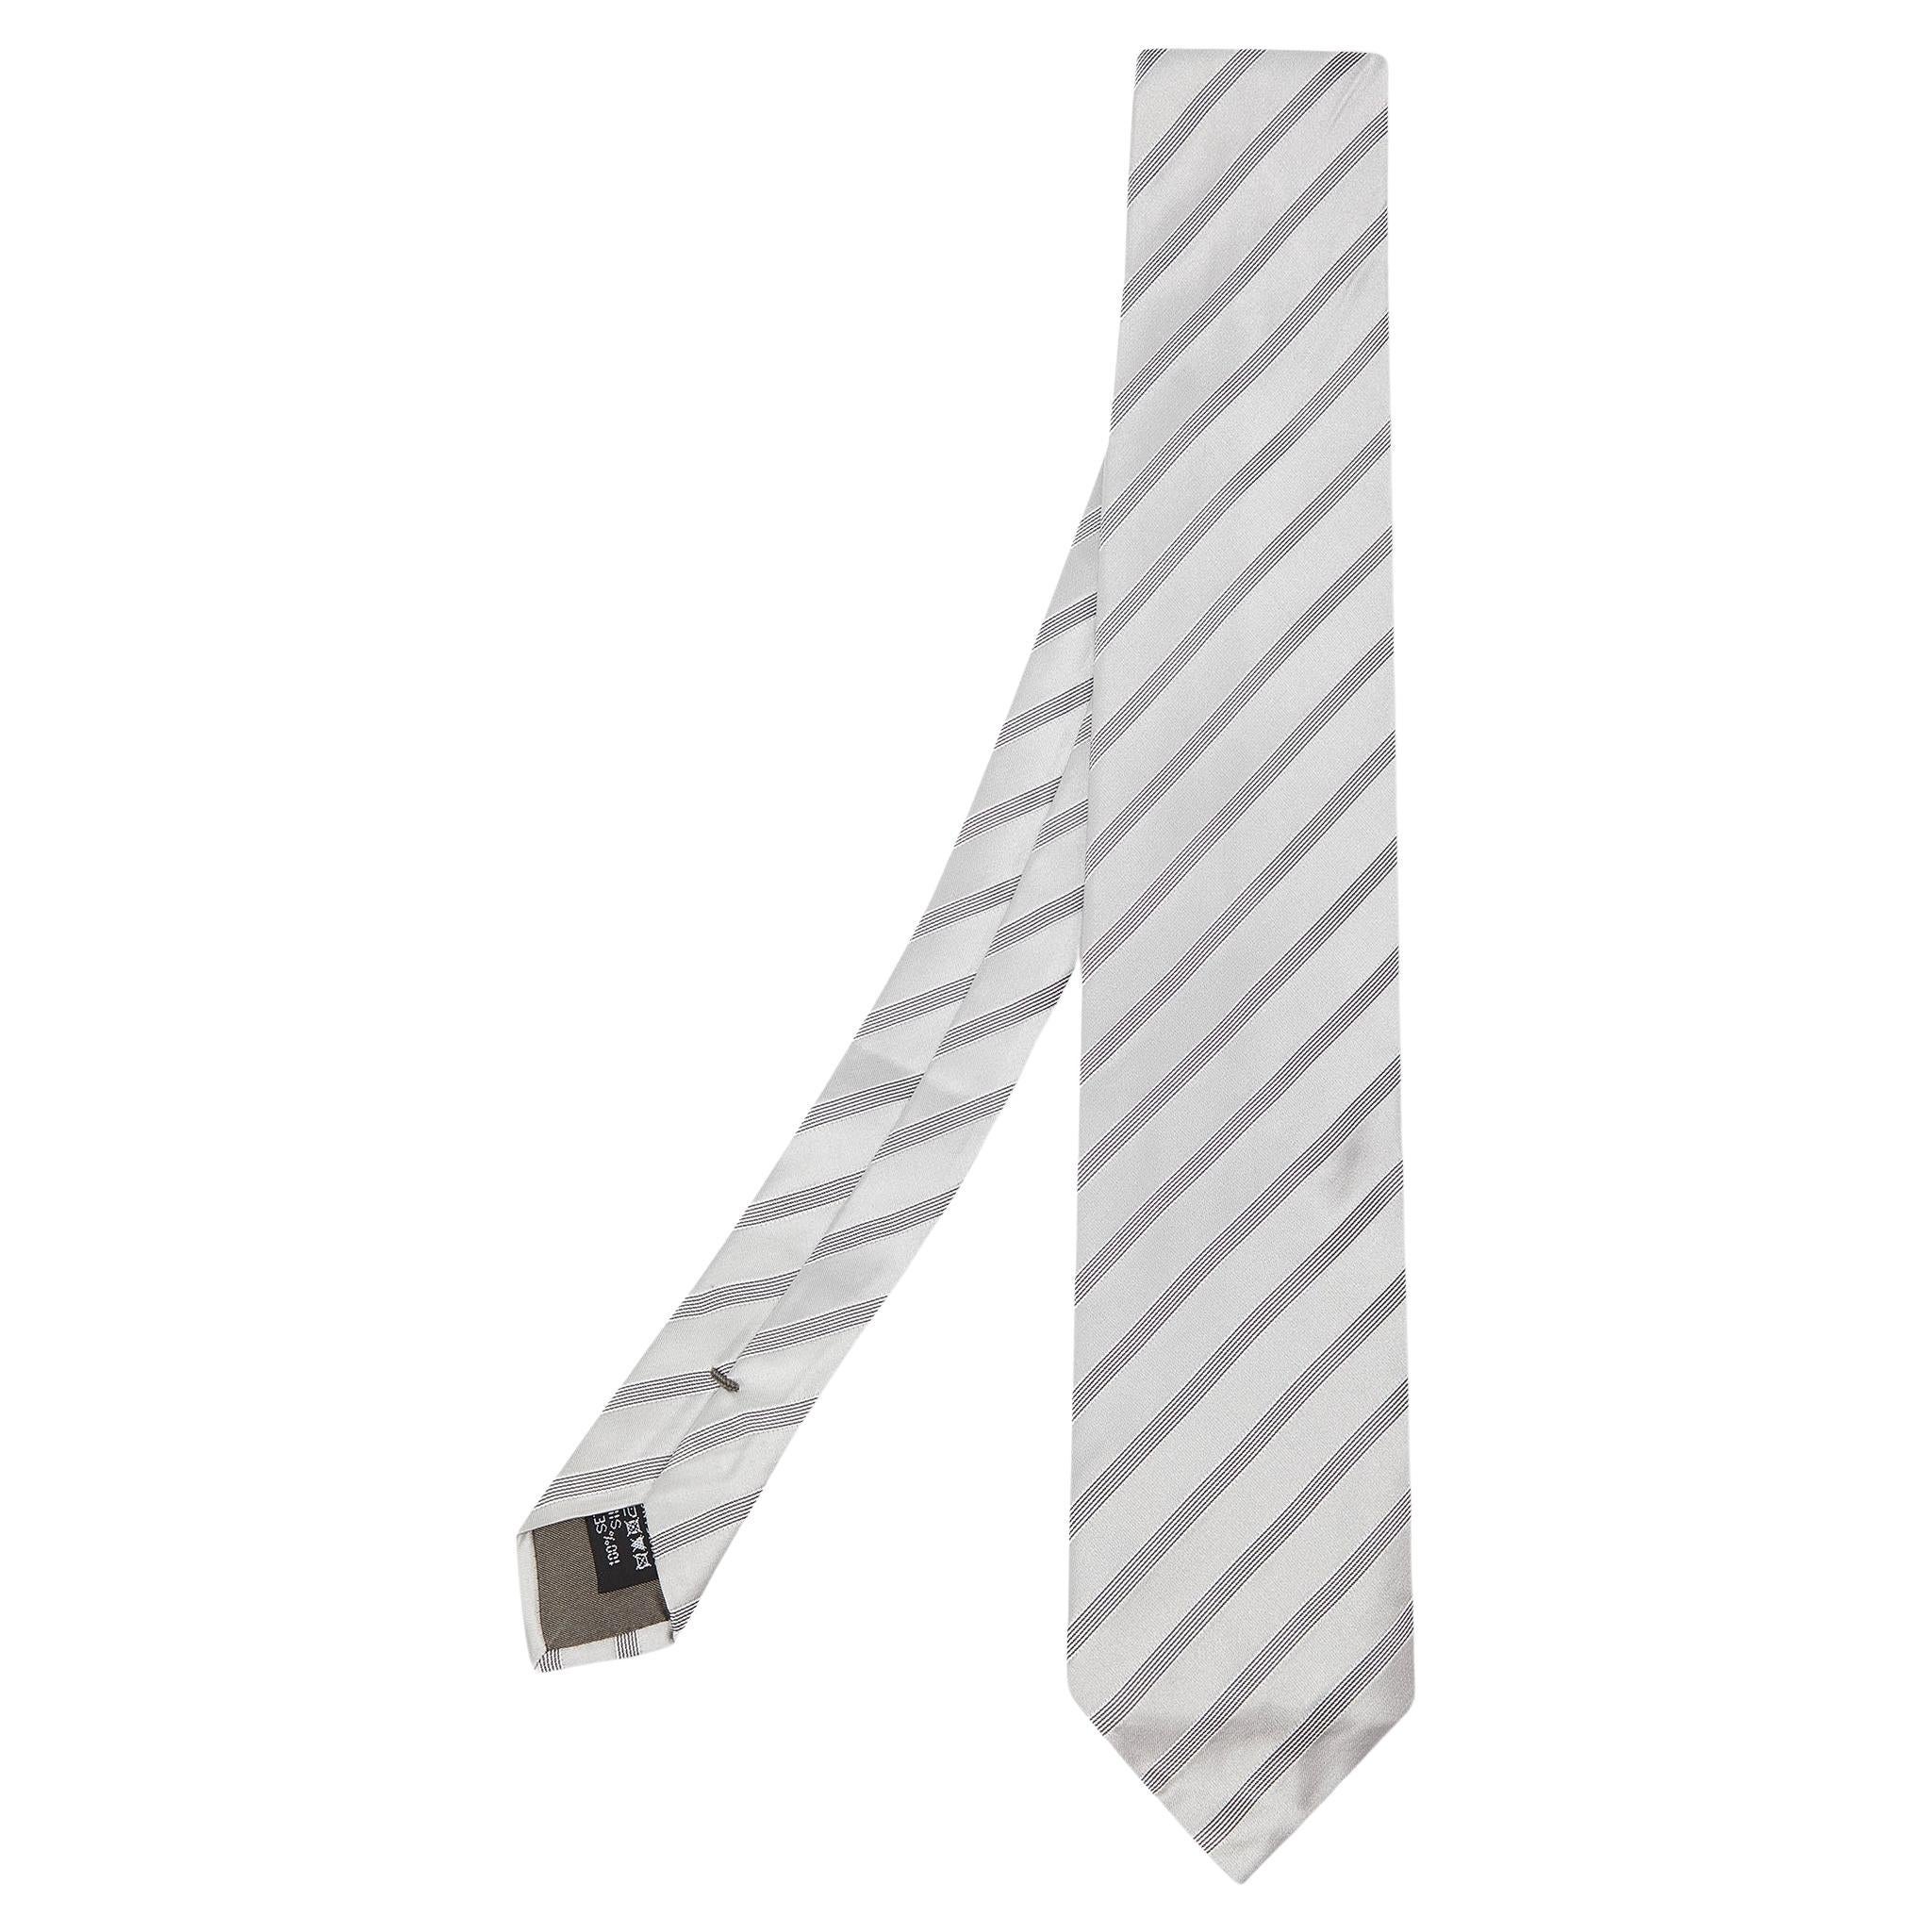 Giorgio Armani Grey Diagonal Striped Silk Tie